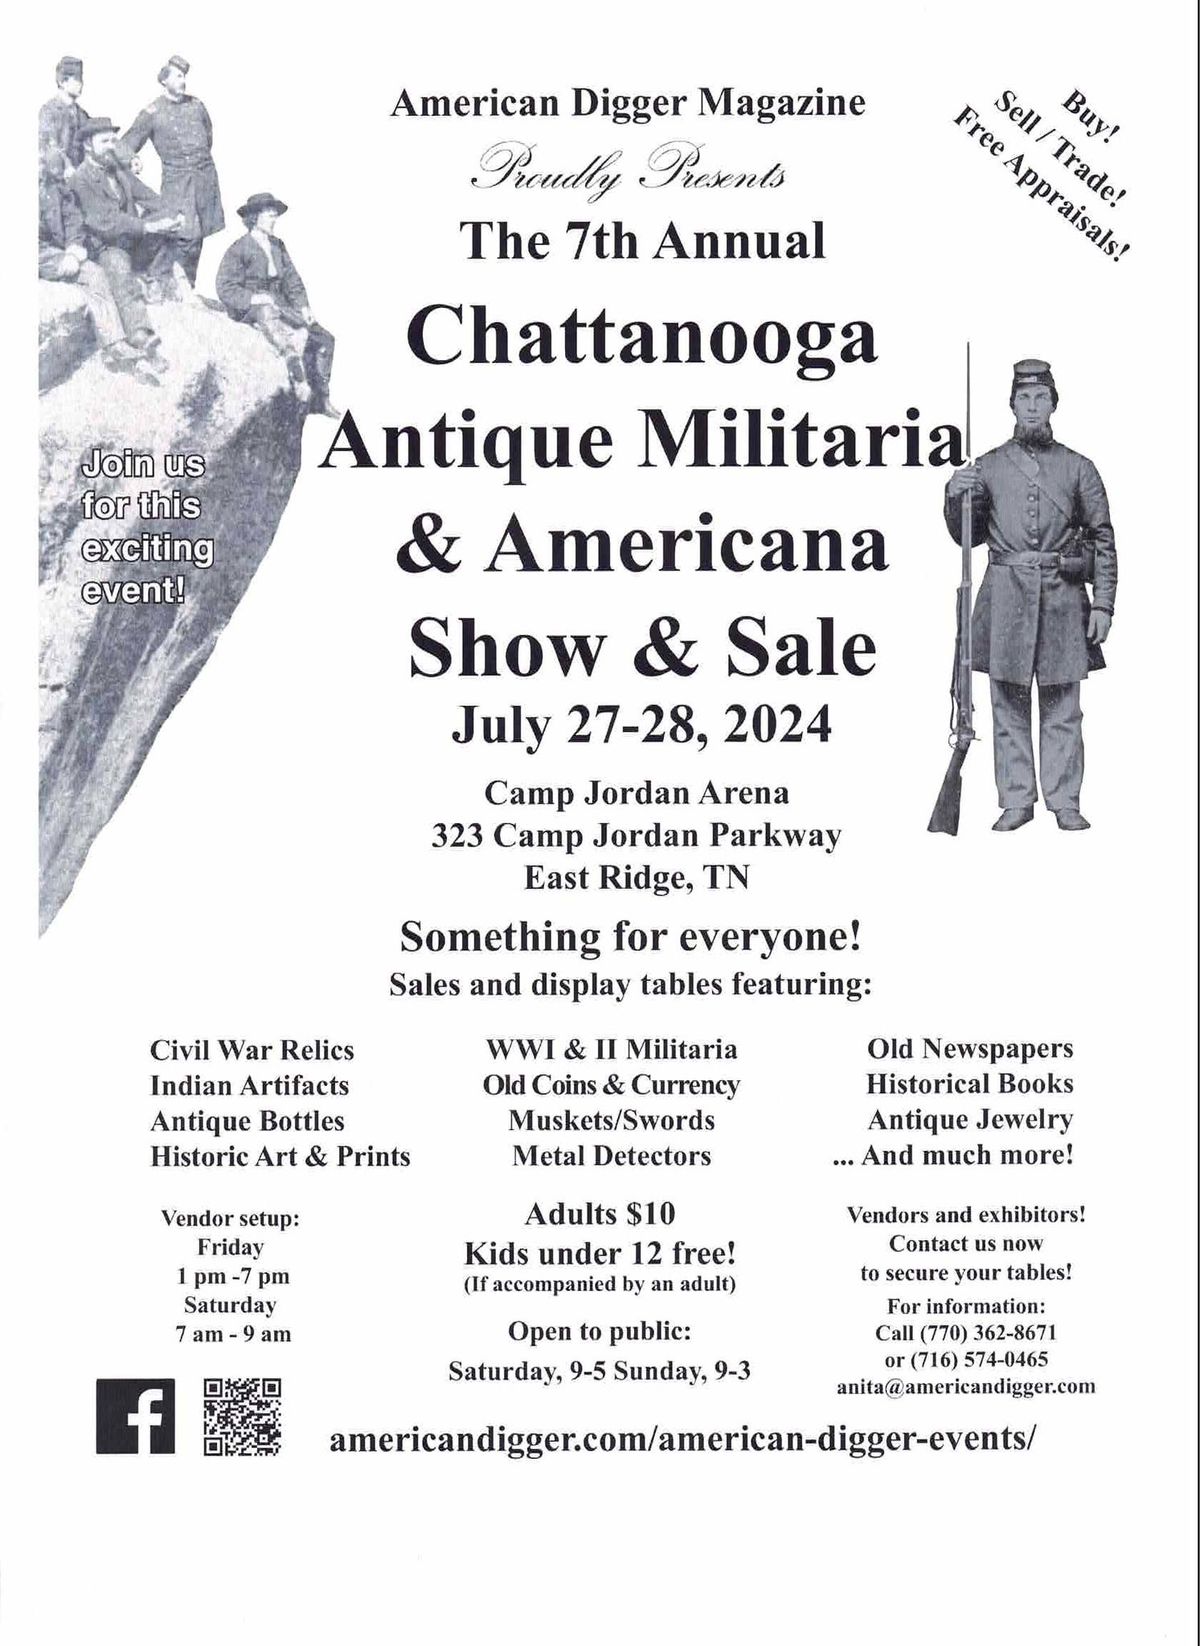 The 7th Annual Chattanooga Antique Militaria & Americana Show & Sale